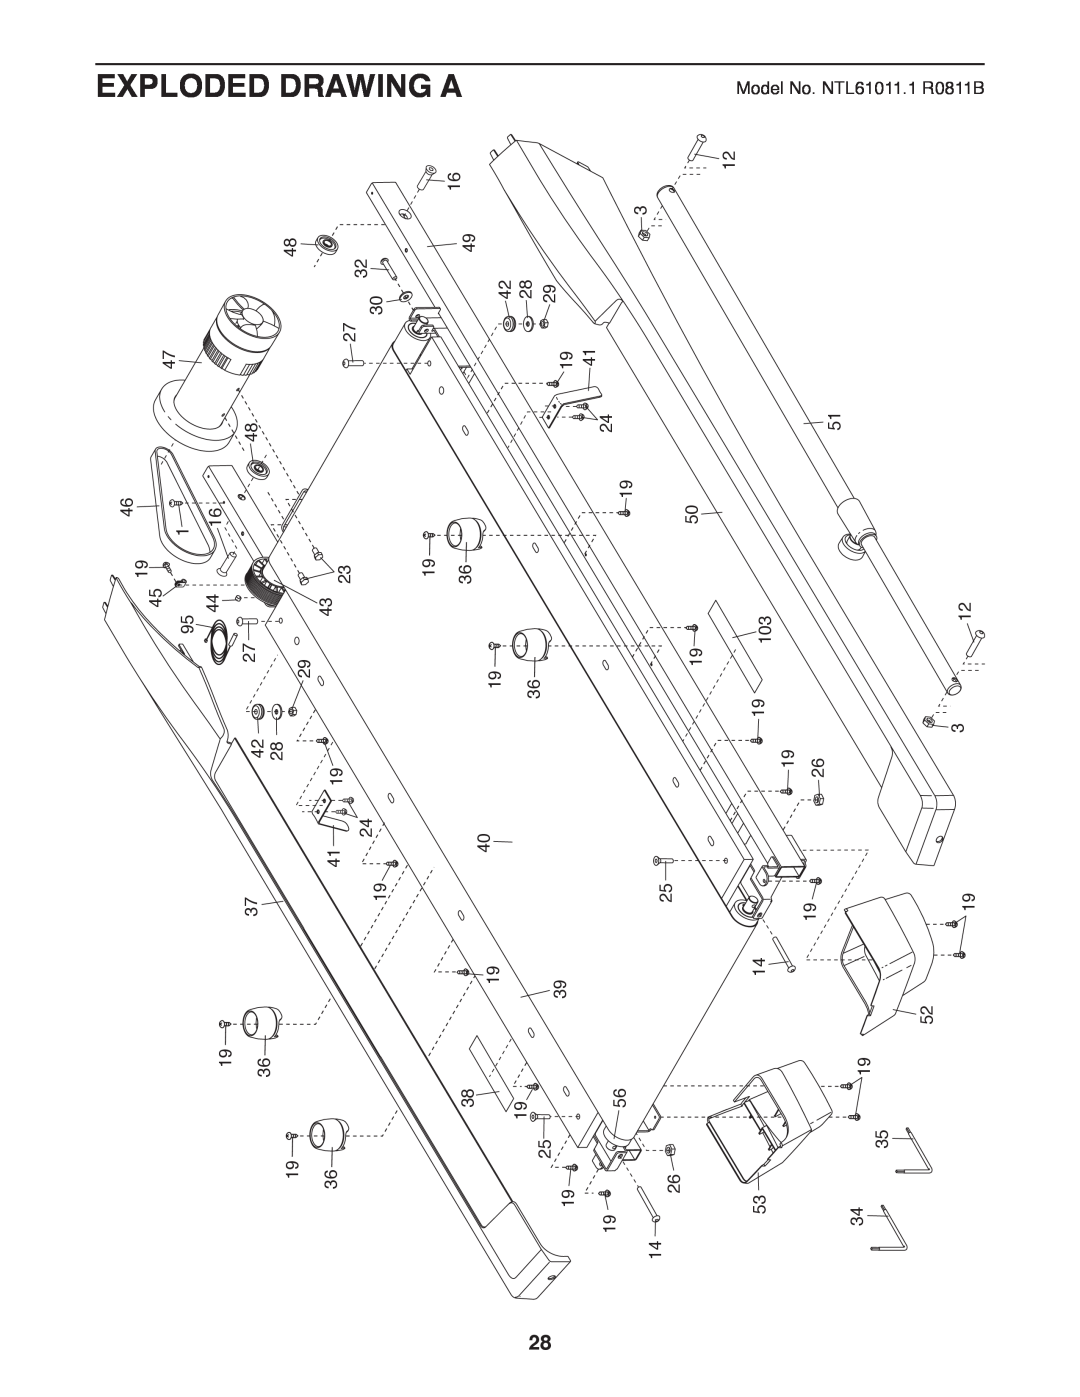 Sears user manual Exploded Drawing, Model No. NTL61011.1, R0811B 